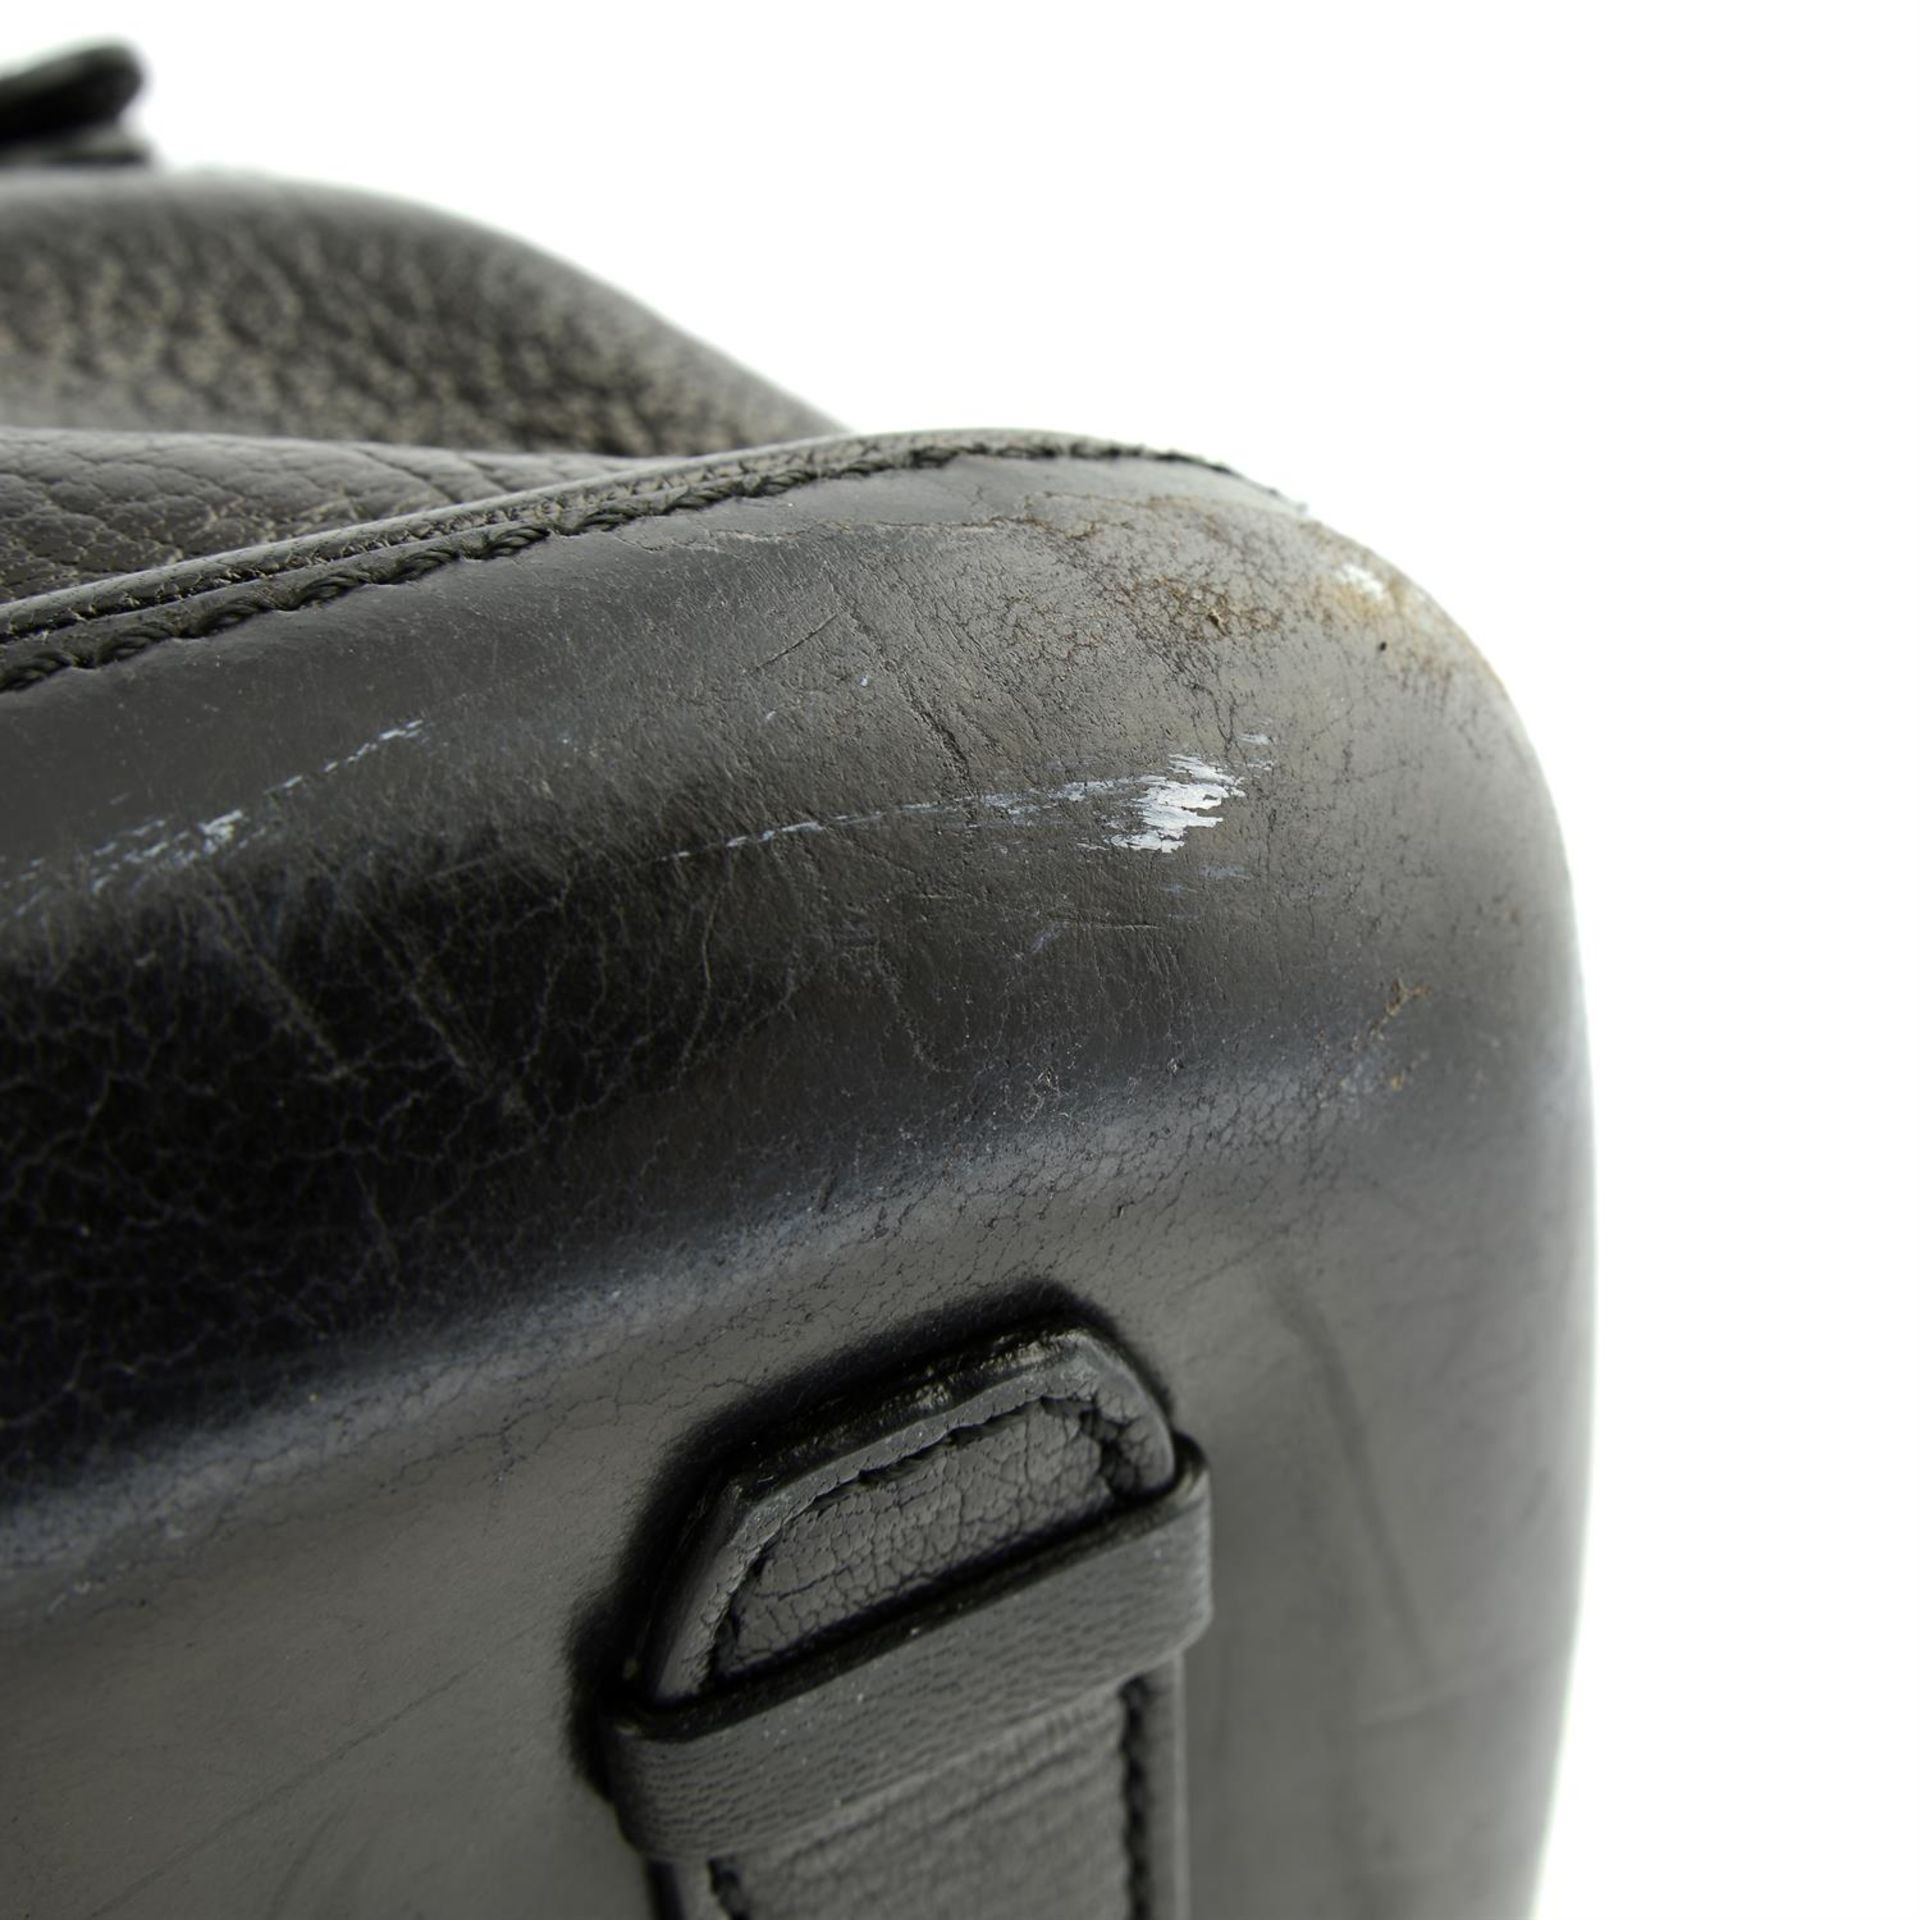 CÉLINE - a black leather handbag. - Image 5 of 6